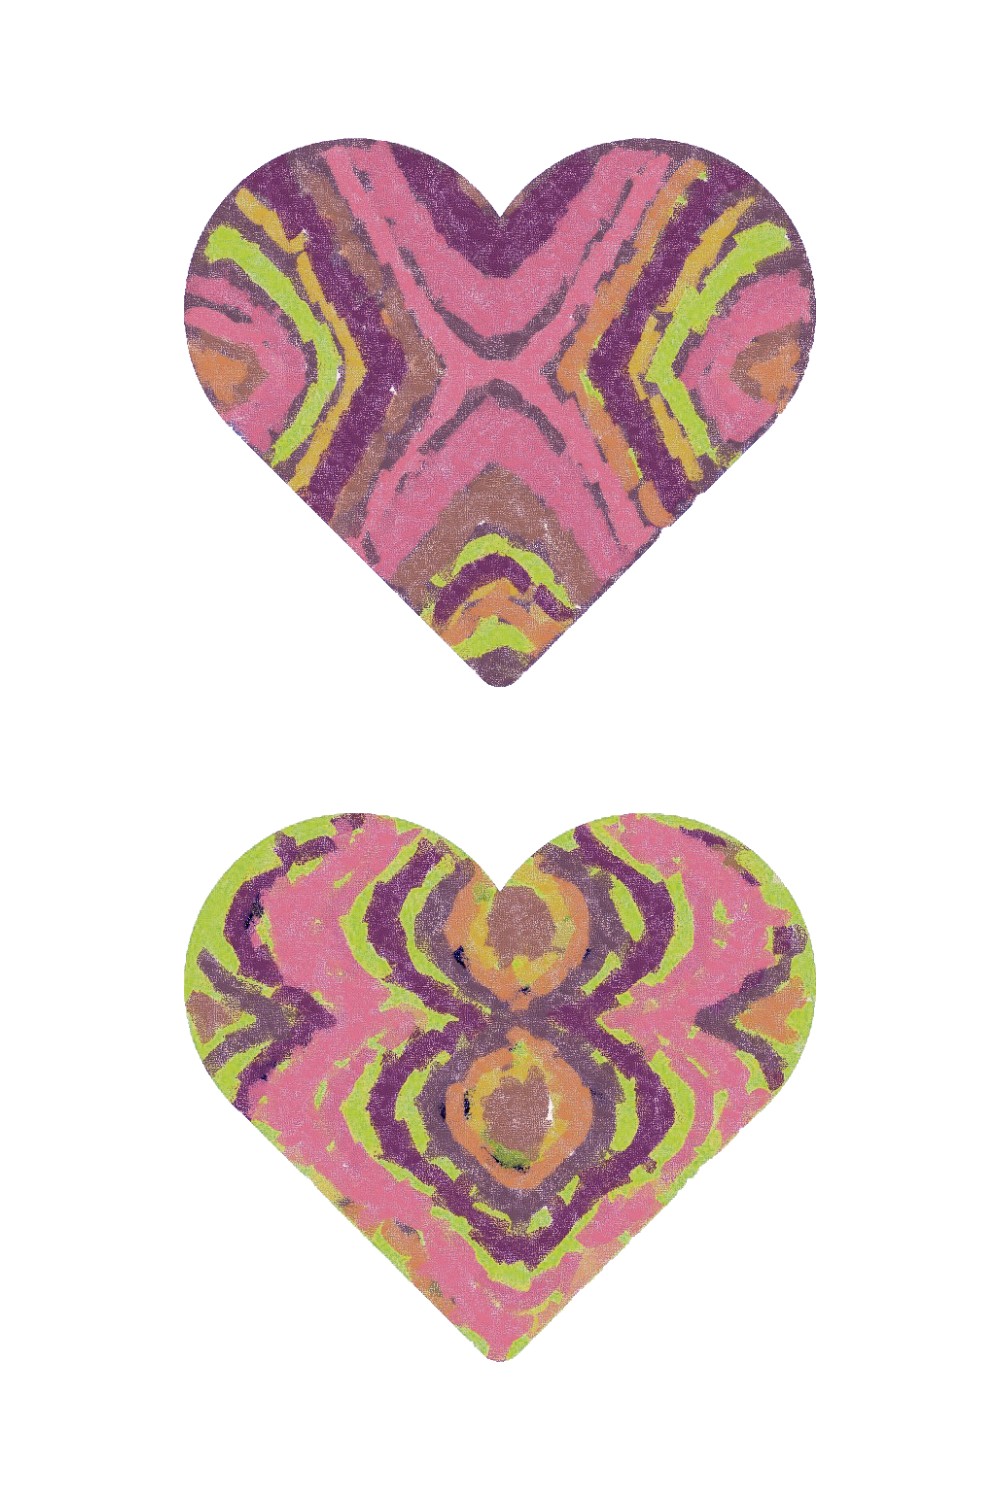 Plaid Watercolor Valentine Heart Cut Files pinterest preview image.